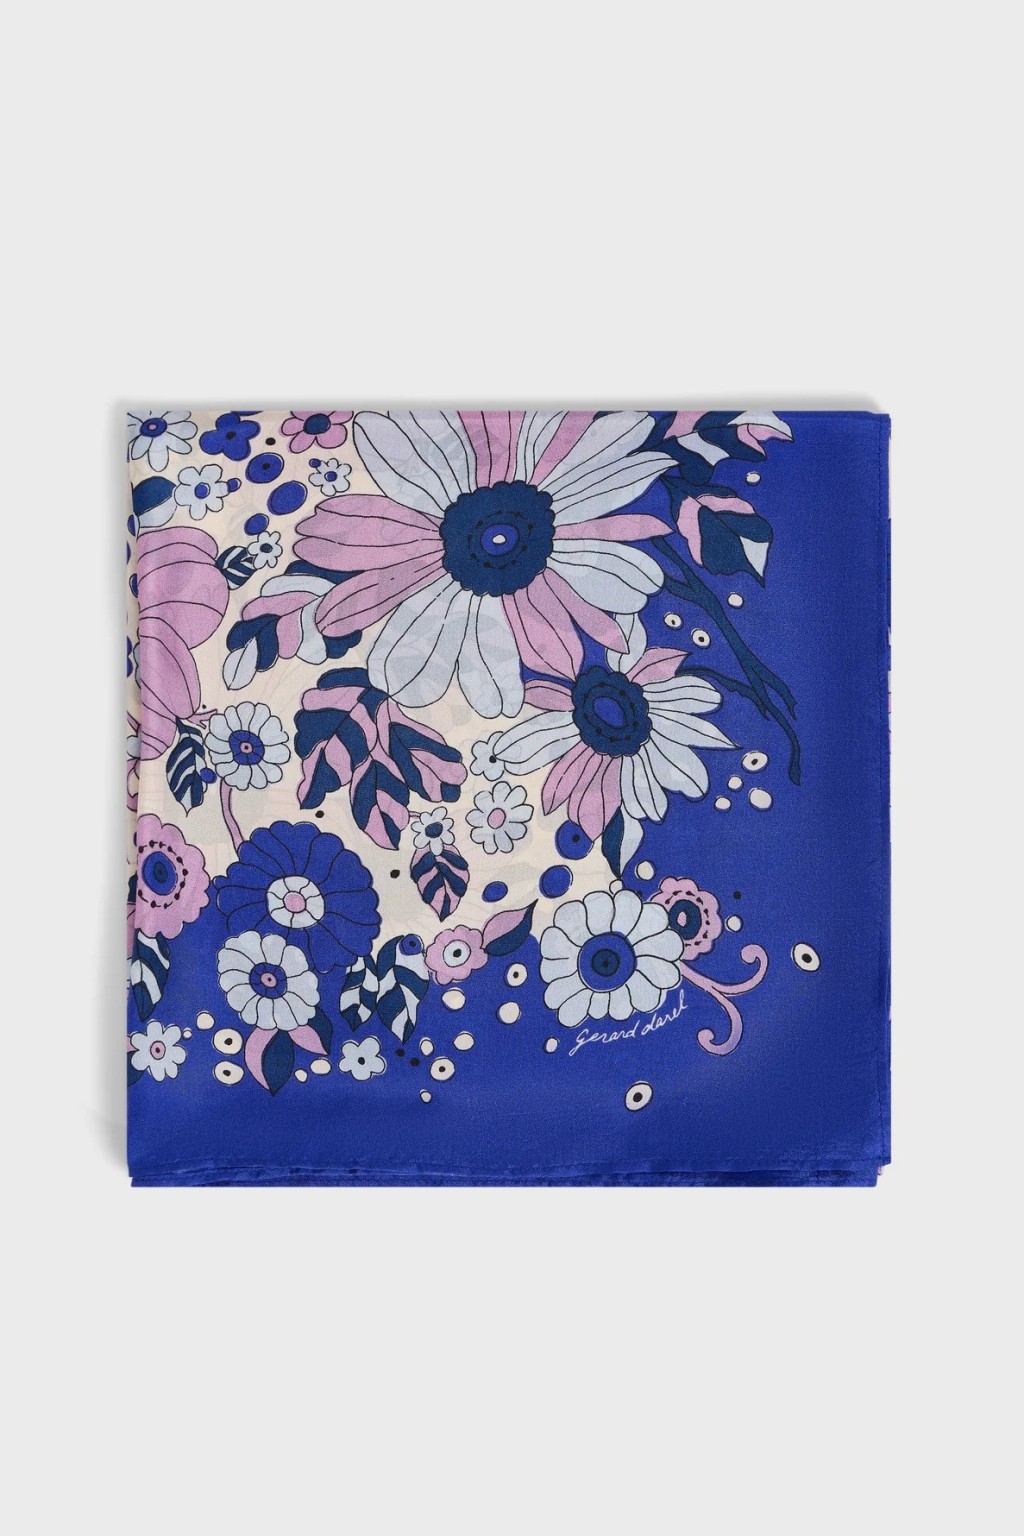 rue Madame Gerard Darel絲巾/$1,475，絲巾上的花卉圖案啟發自上世紀七十年代的圖案。